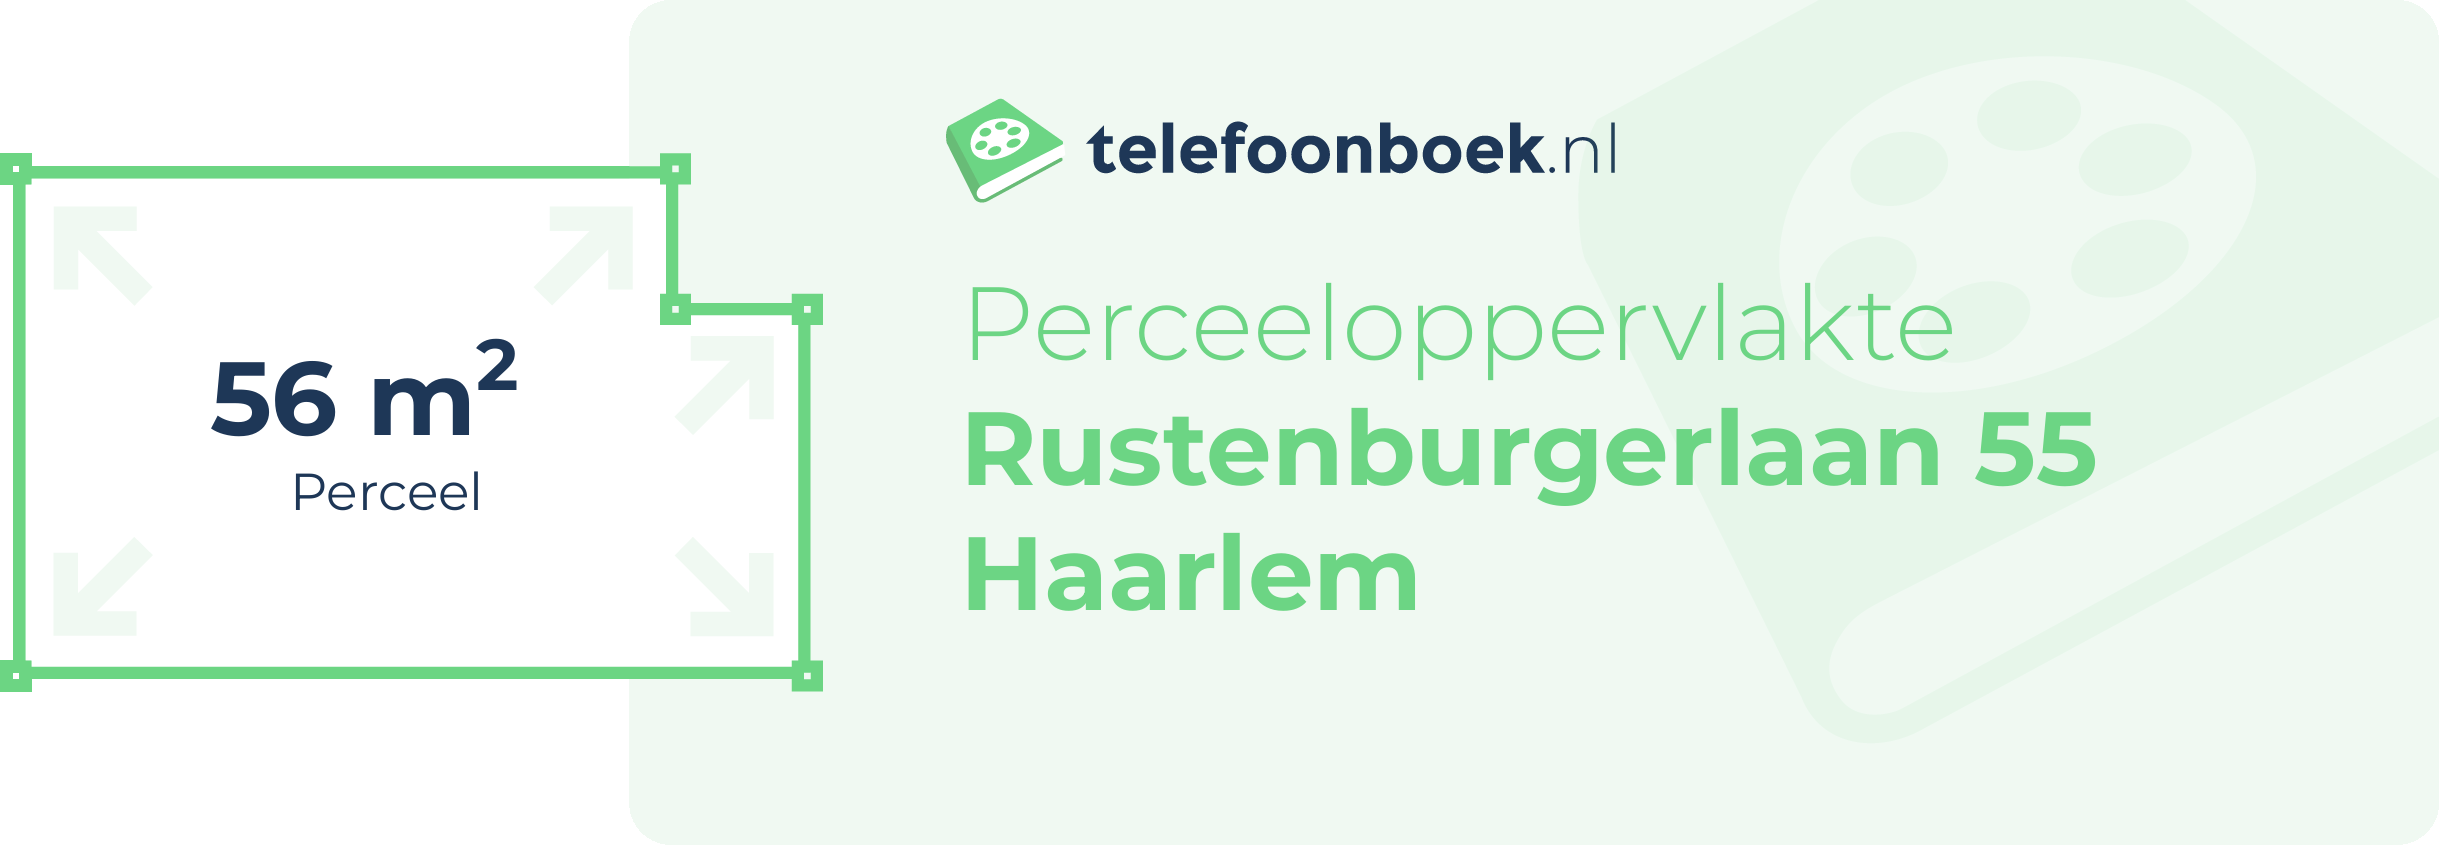 Perceeloppervlakte Rustenburgerlaan 55 Haarlem